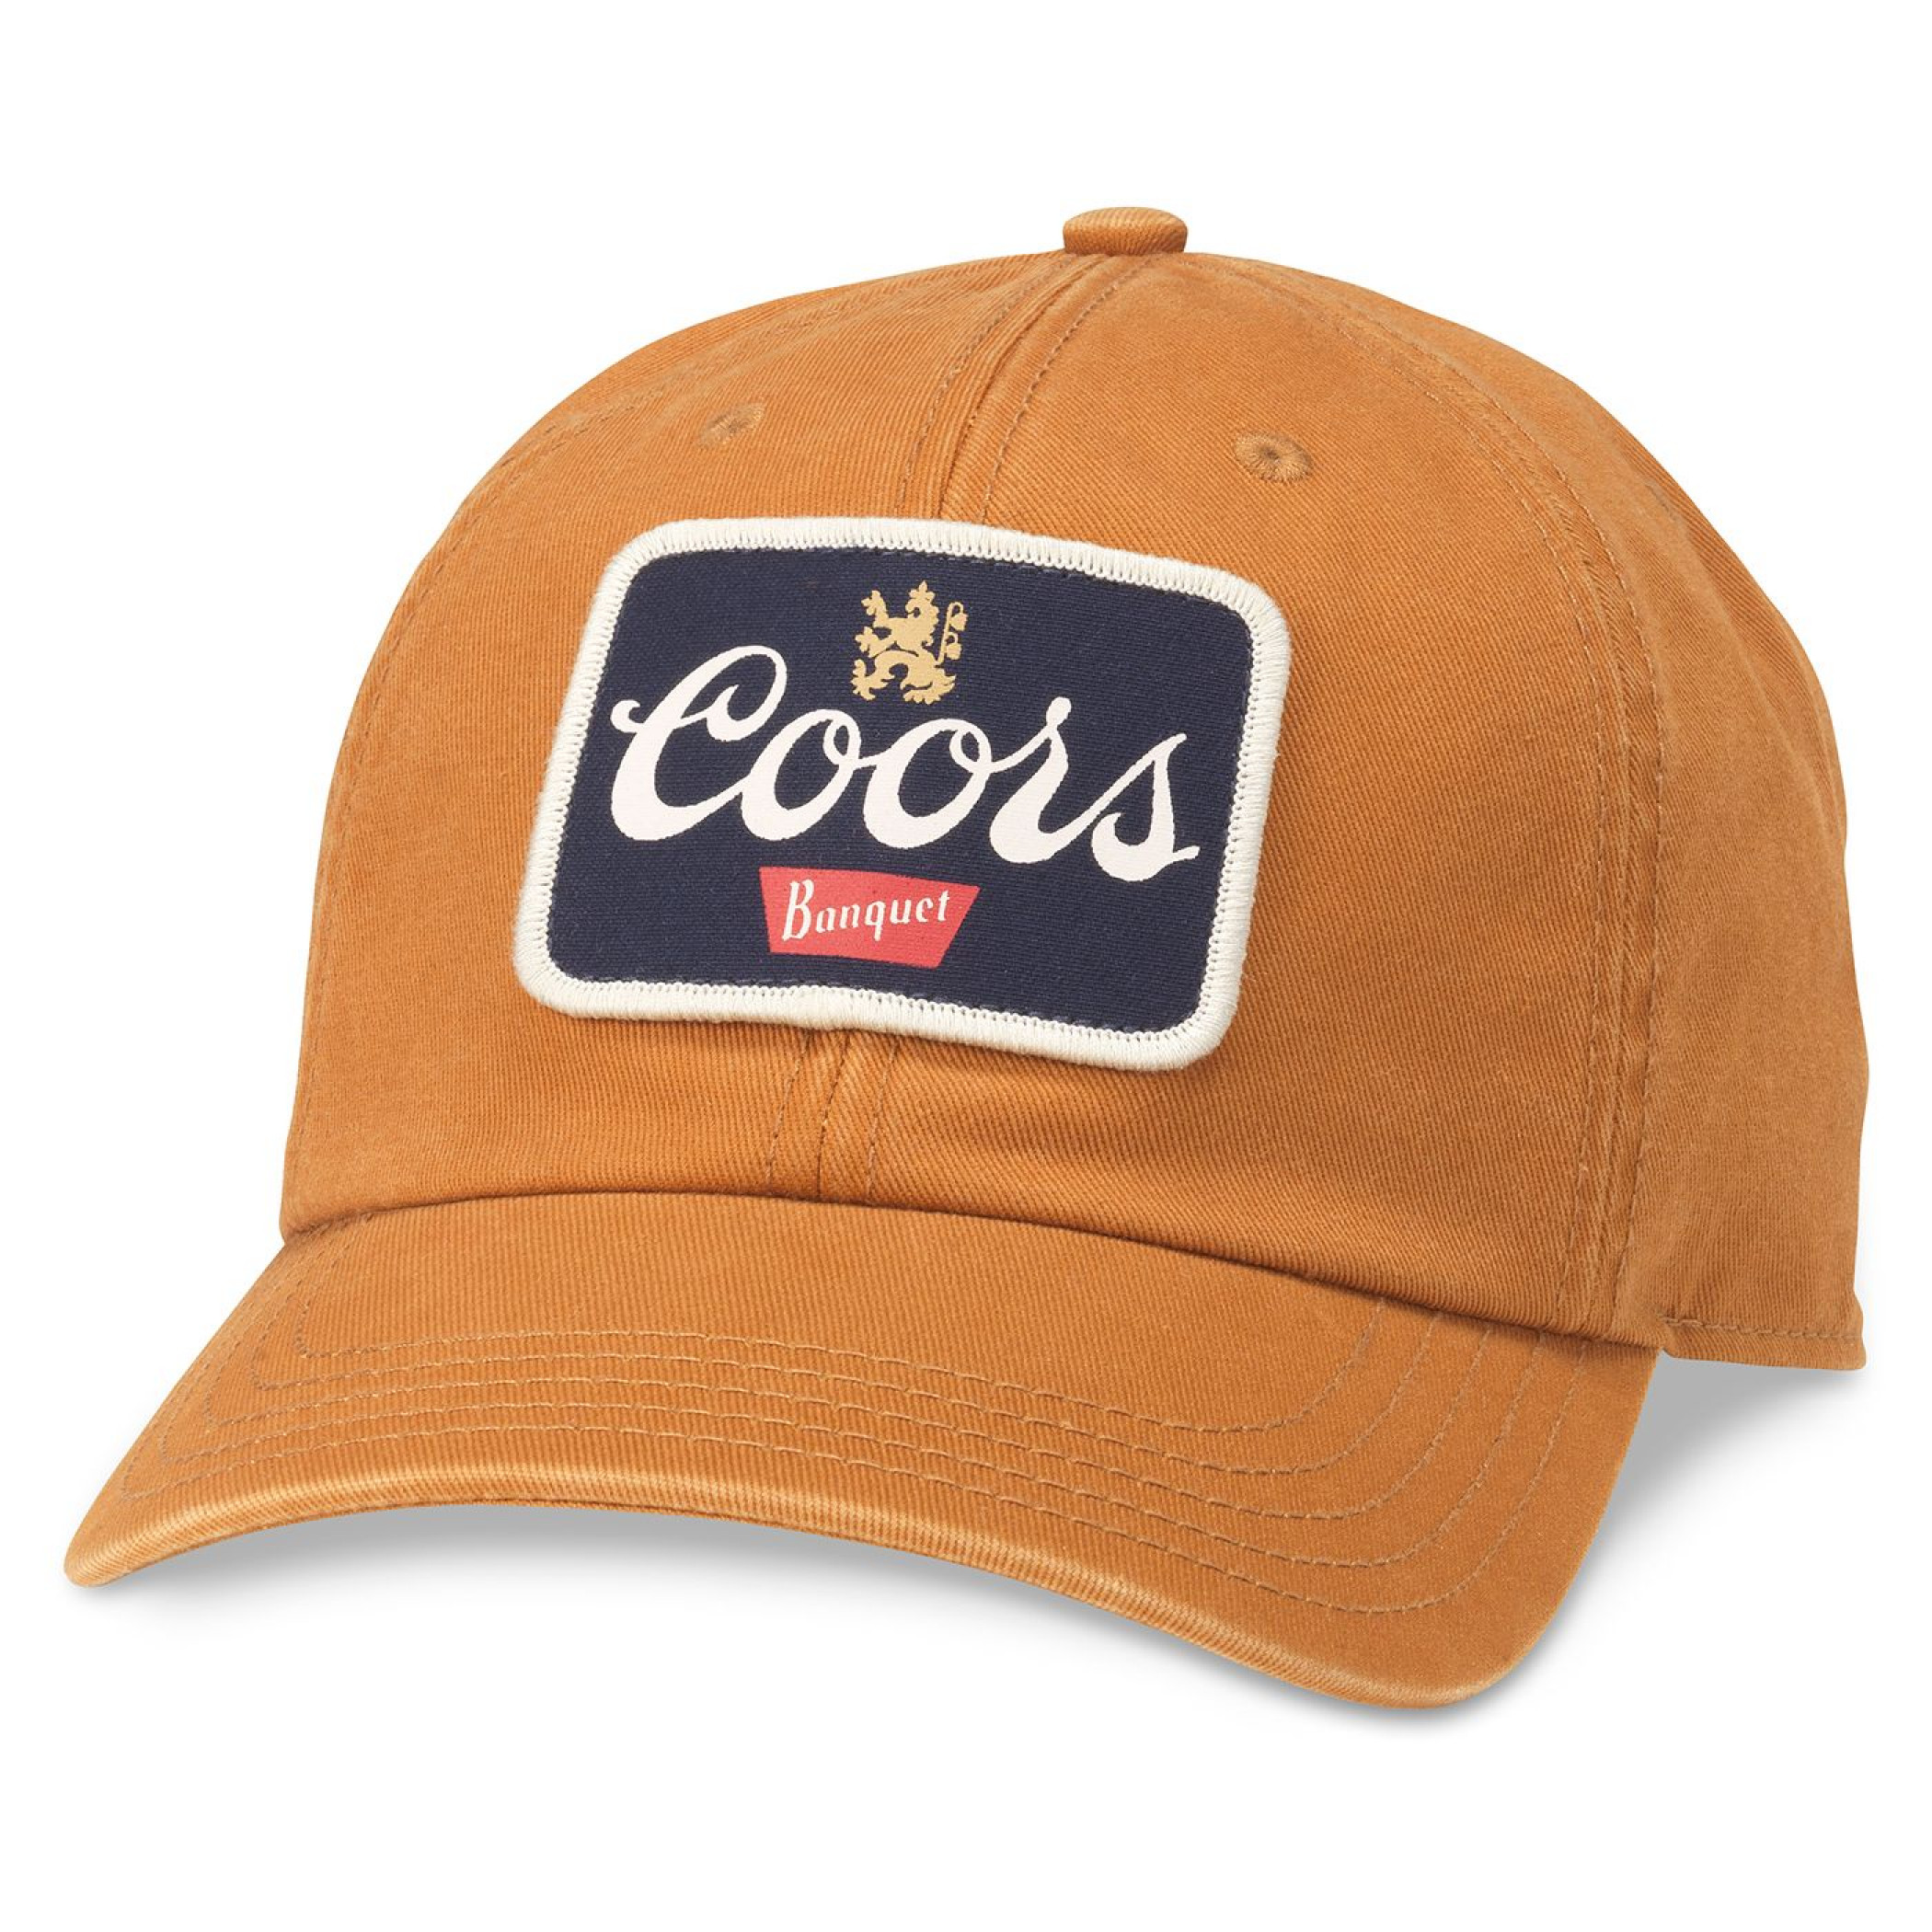 Coors Banquet Logo Patch Adjustable Hat